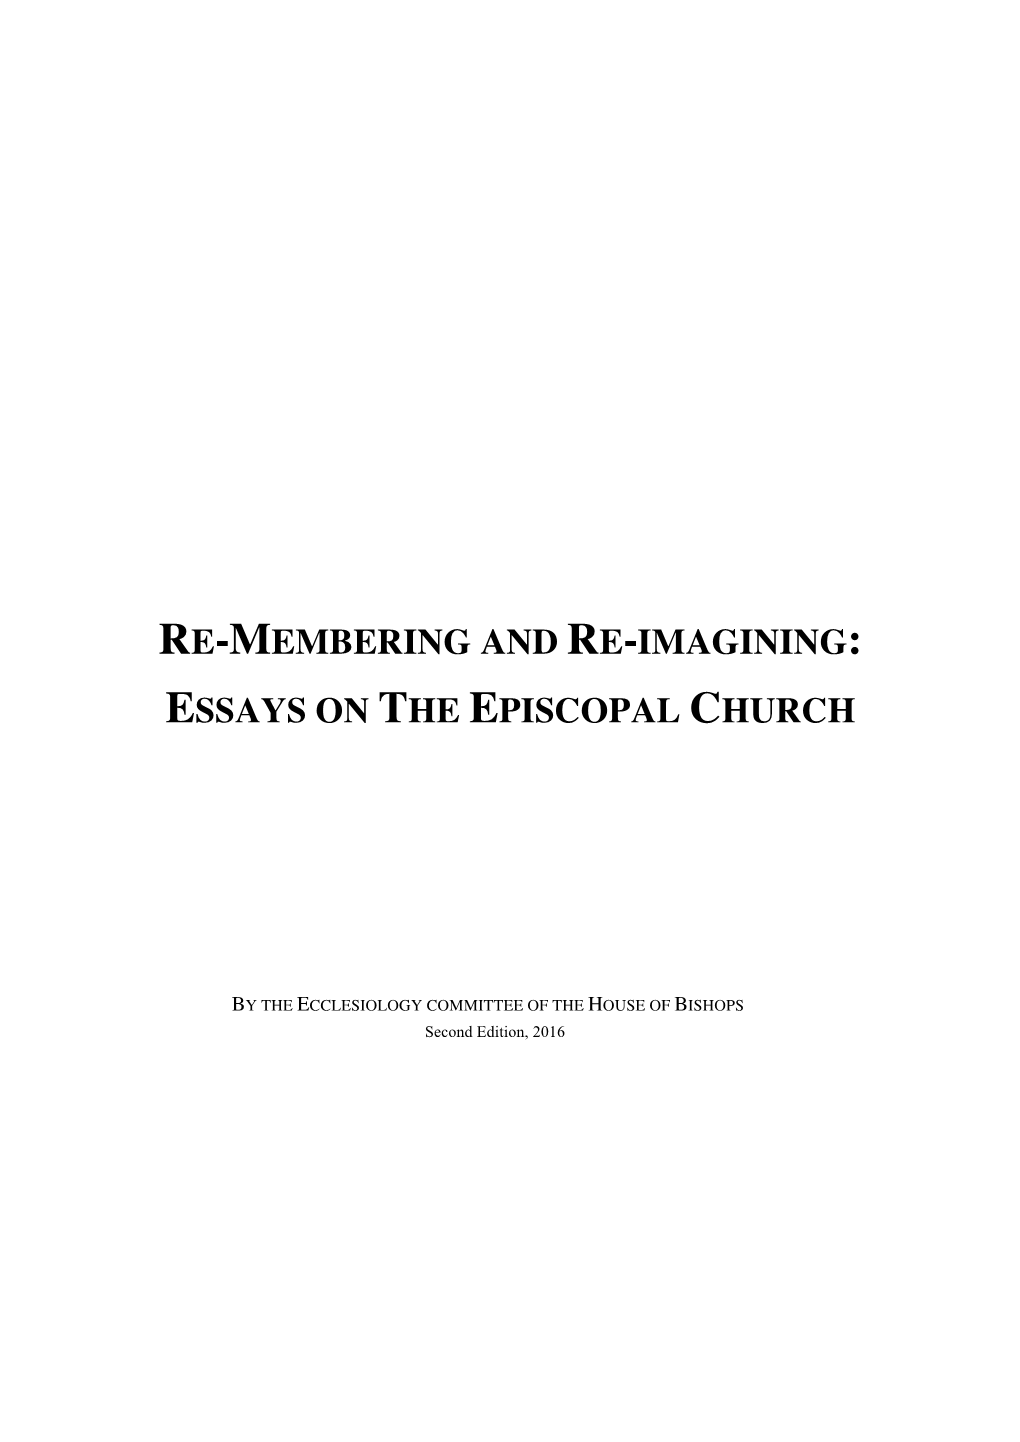 Essays on the Episcopal Church